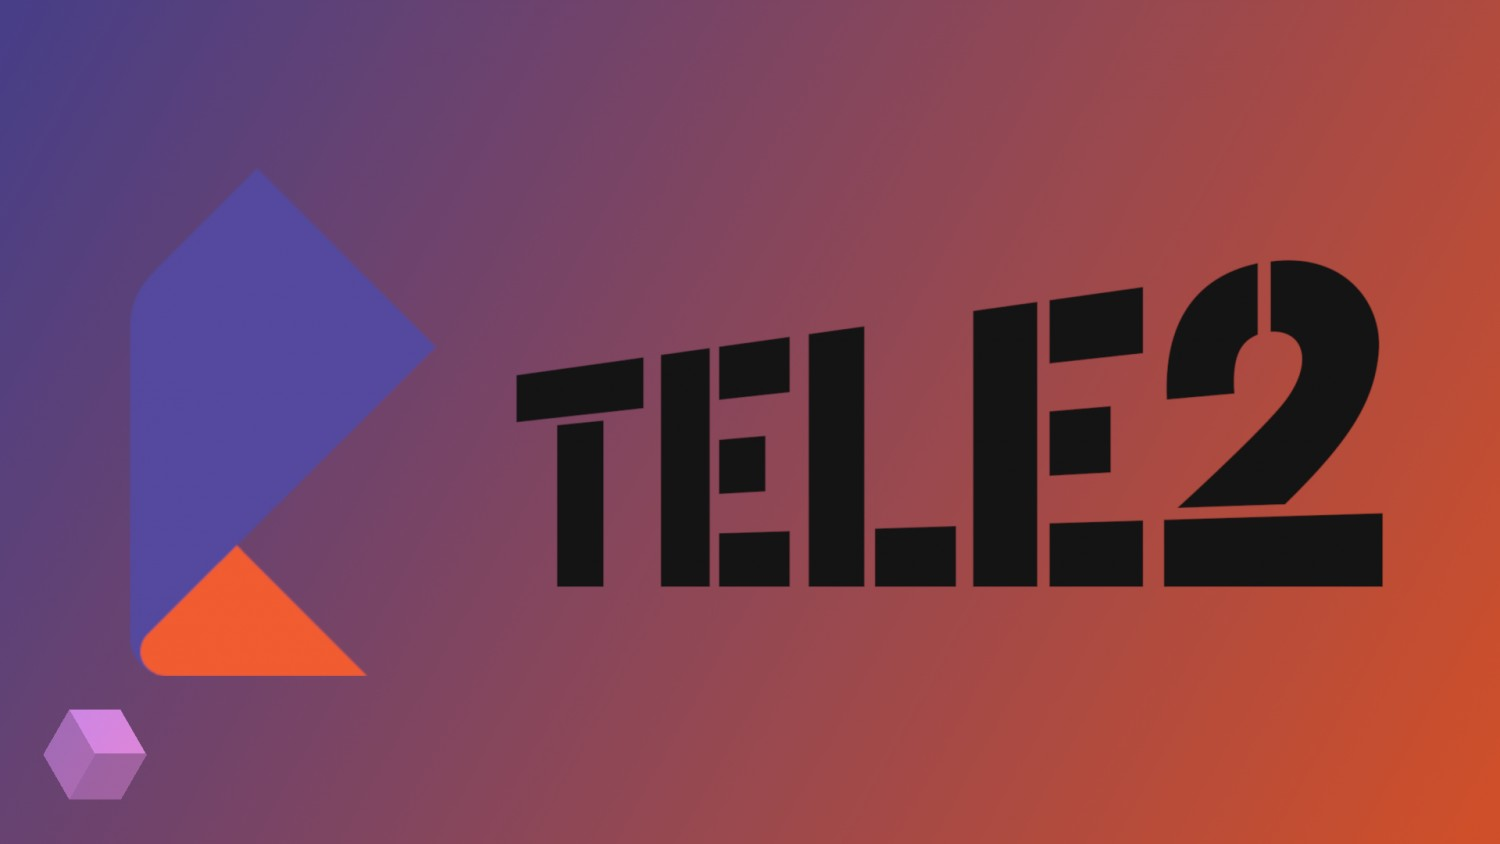 Теле тет. Tele2 логотип. Логотип теле2 картинки. Сотовый оператор теле2. Первый логотип теле2.